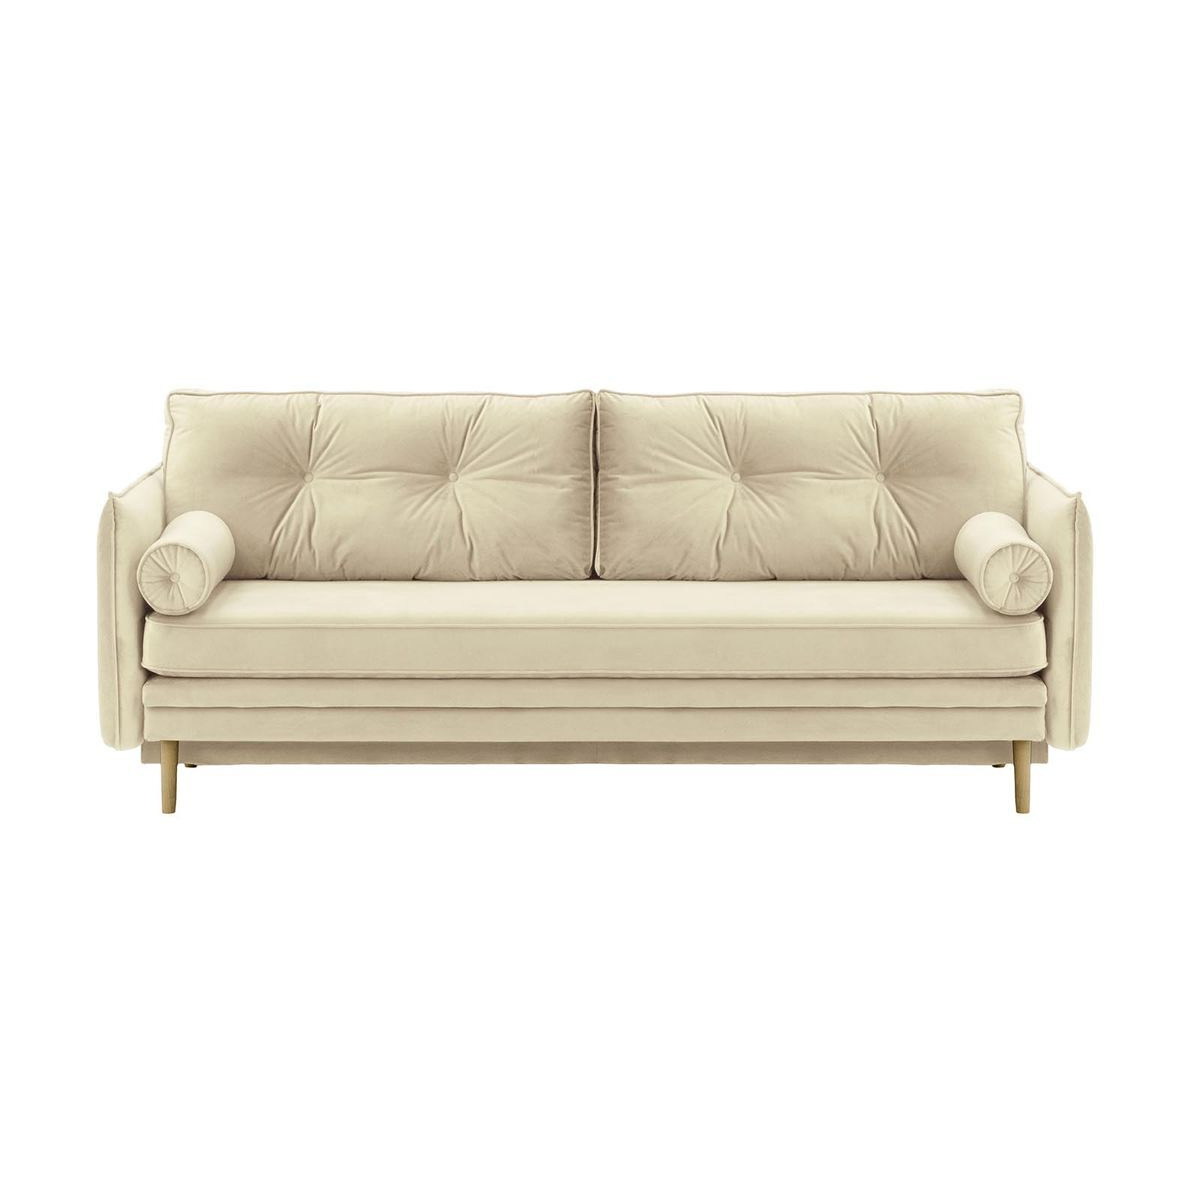 Darnet Sofa Bed with Storage, light beige, Leg colour: wax black - image 1